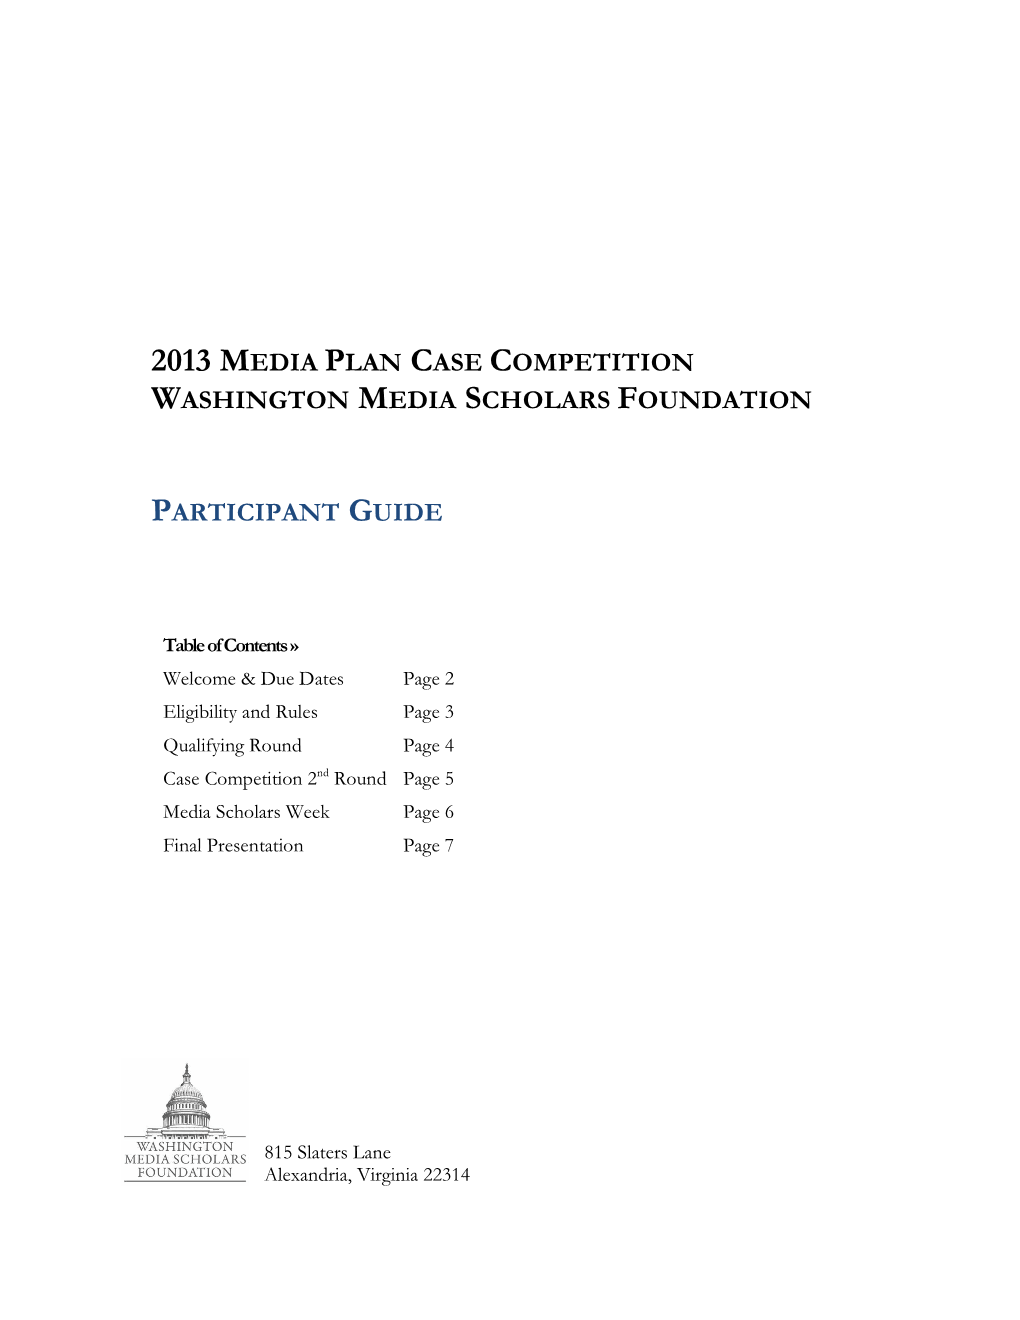 2013 Media Plan Case Competition Washington Media Scholars Foundation Participant Guide